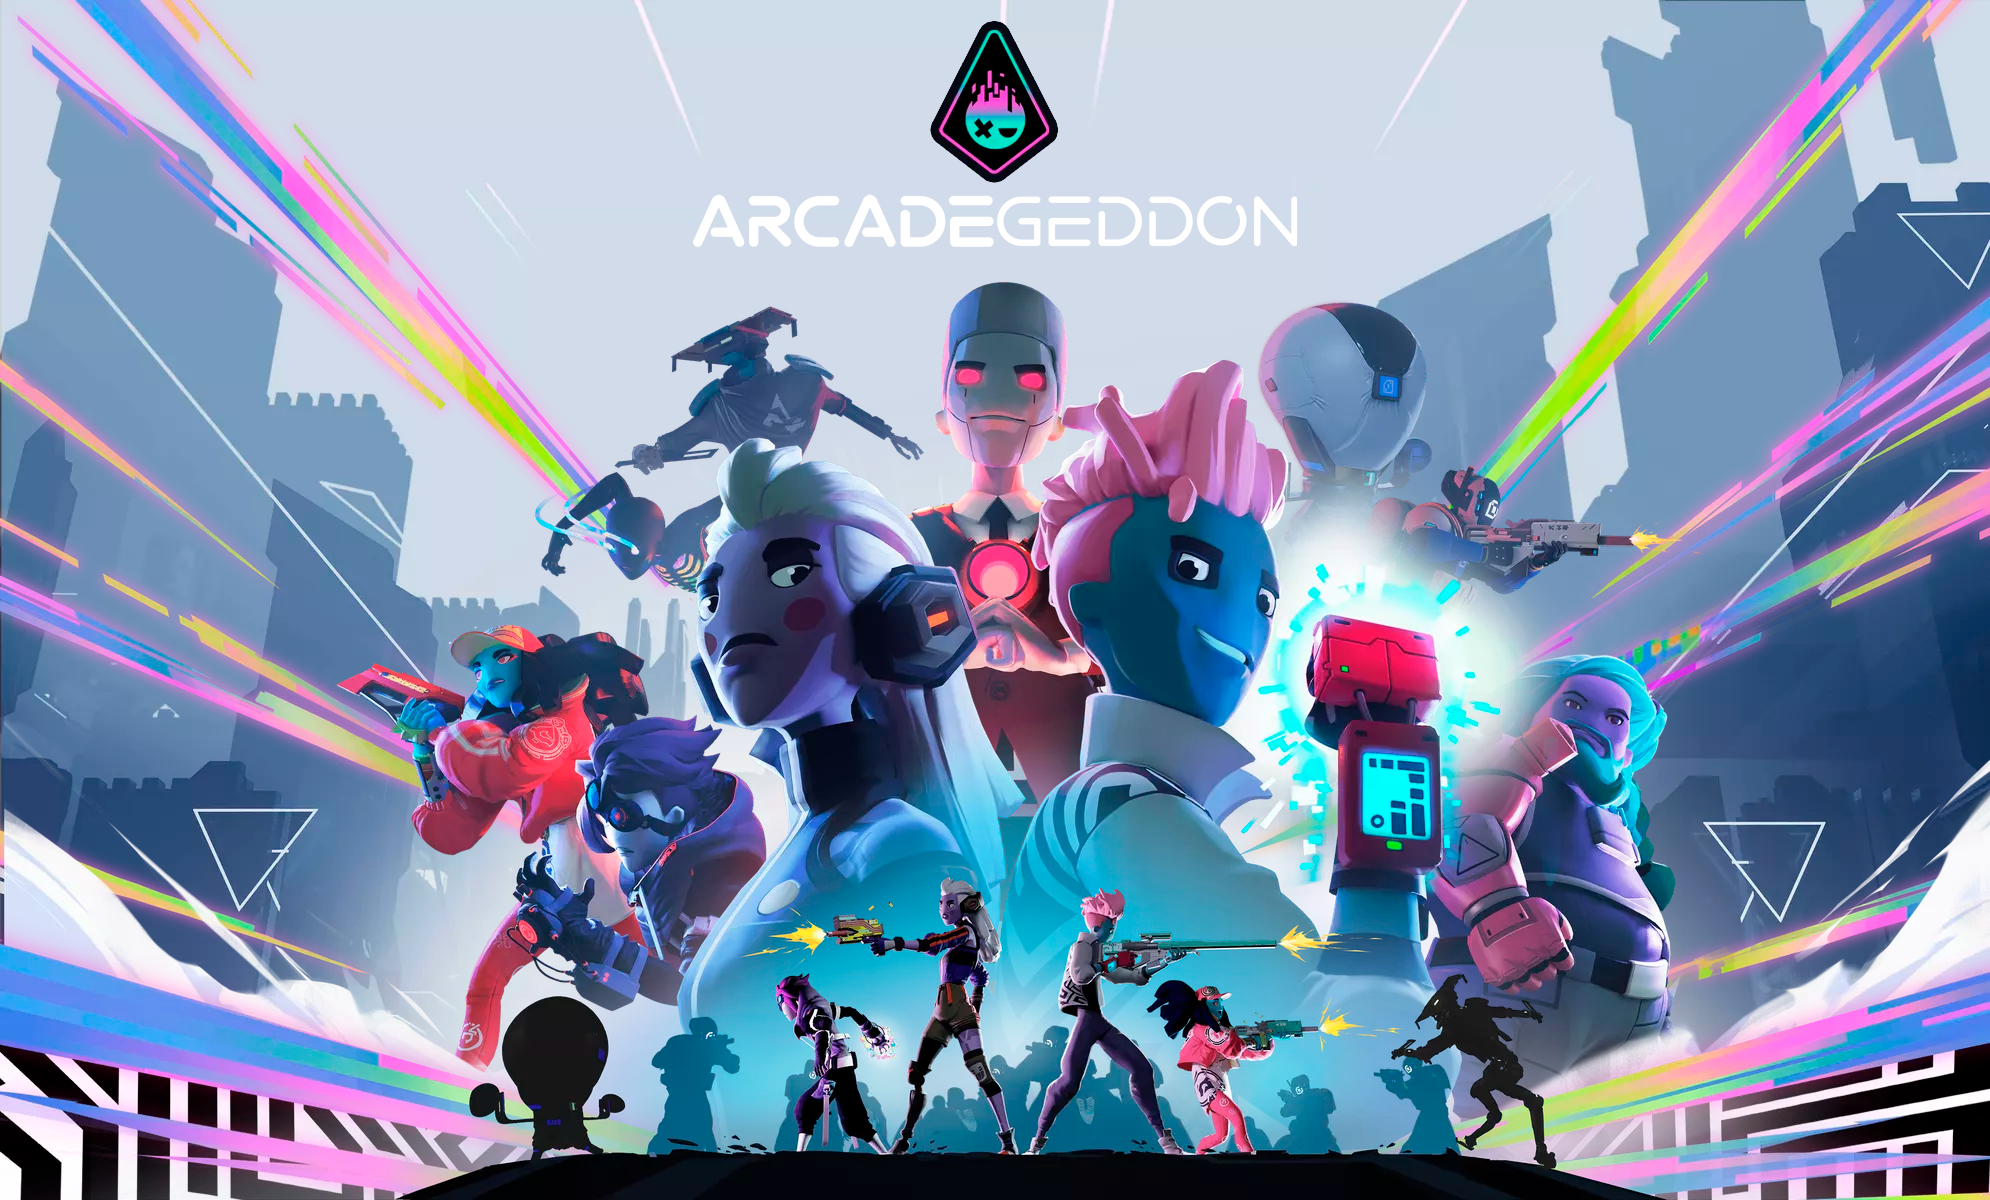 Video Game Arcadegeddon HD Wallpaper | Background Image